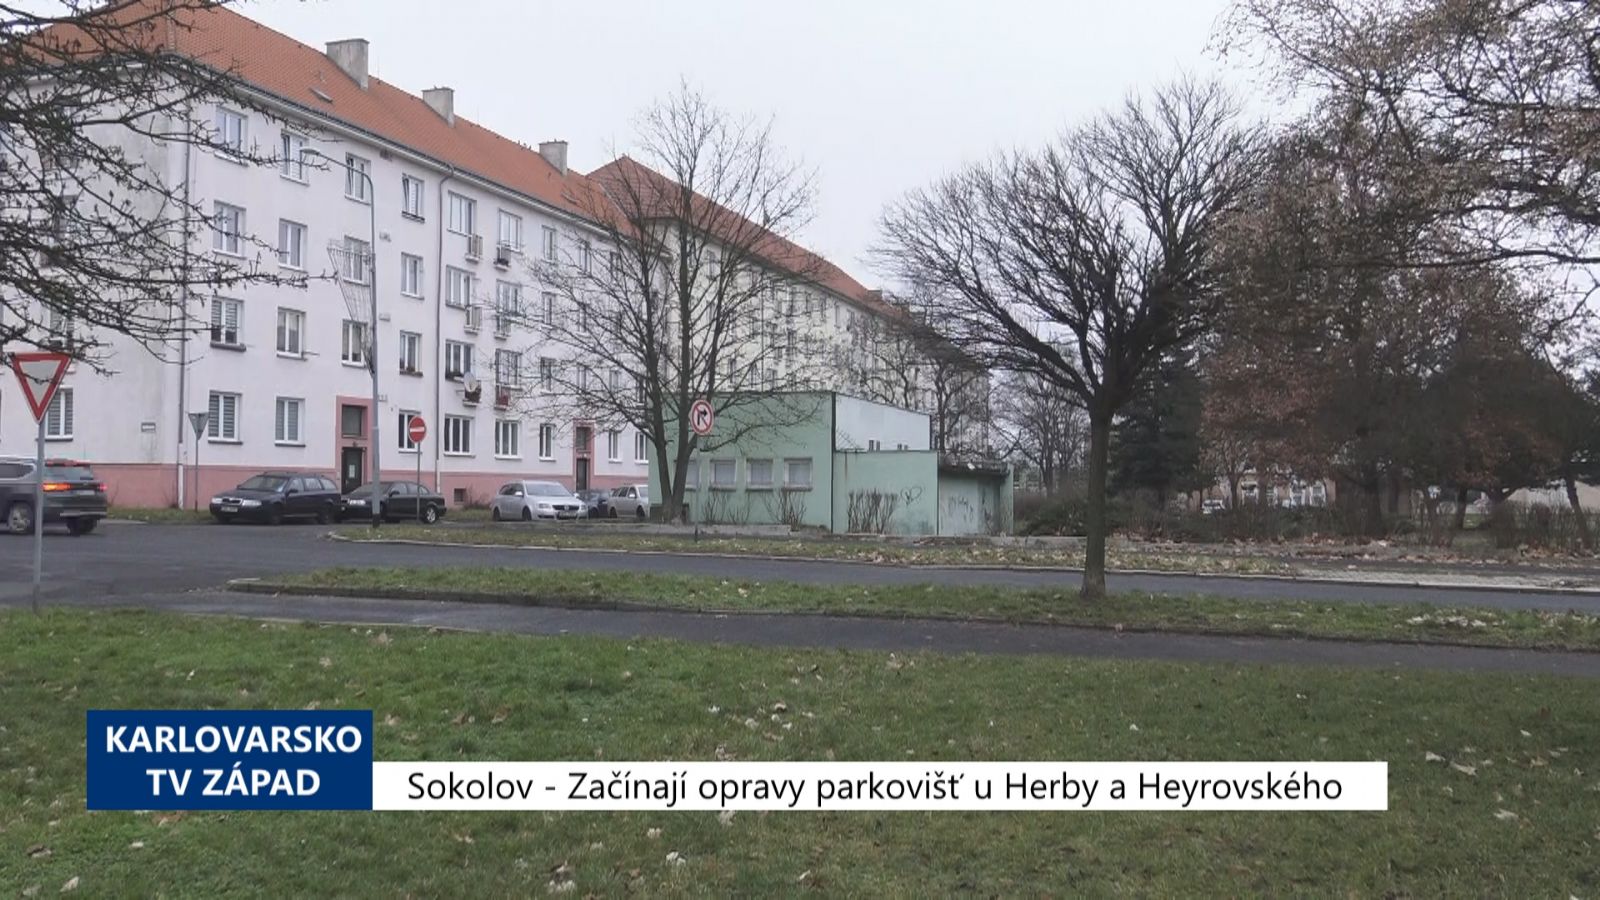 Sokolov: Začínají opravy parkovišť U Herby a Heyrovského (TV Západ)